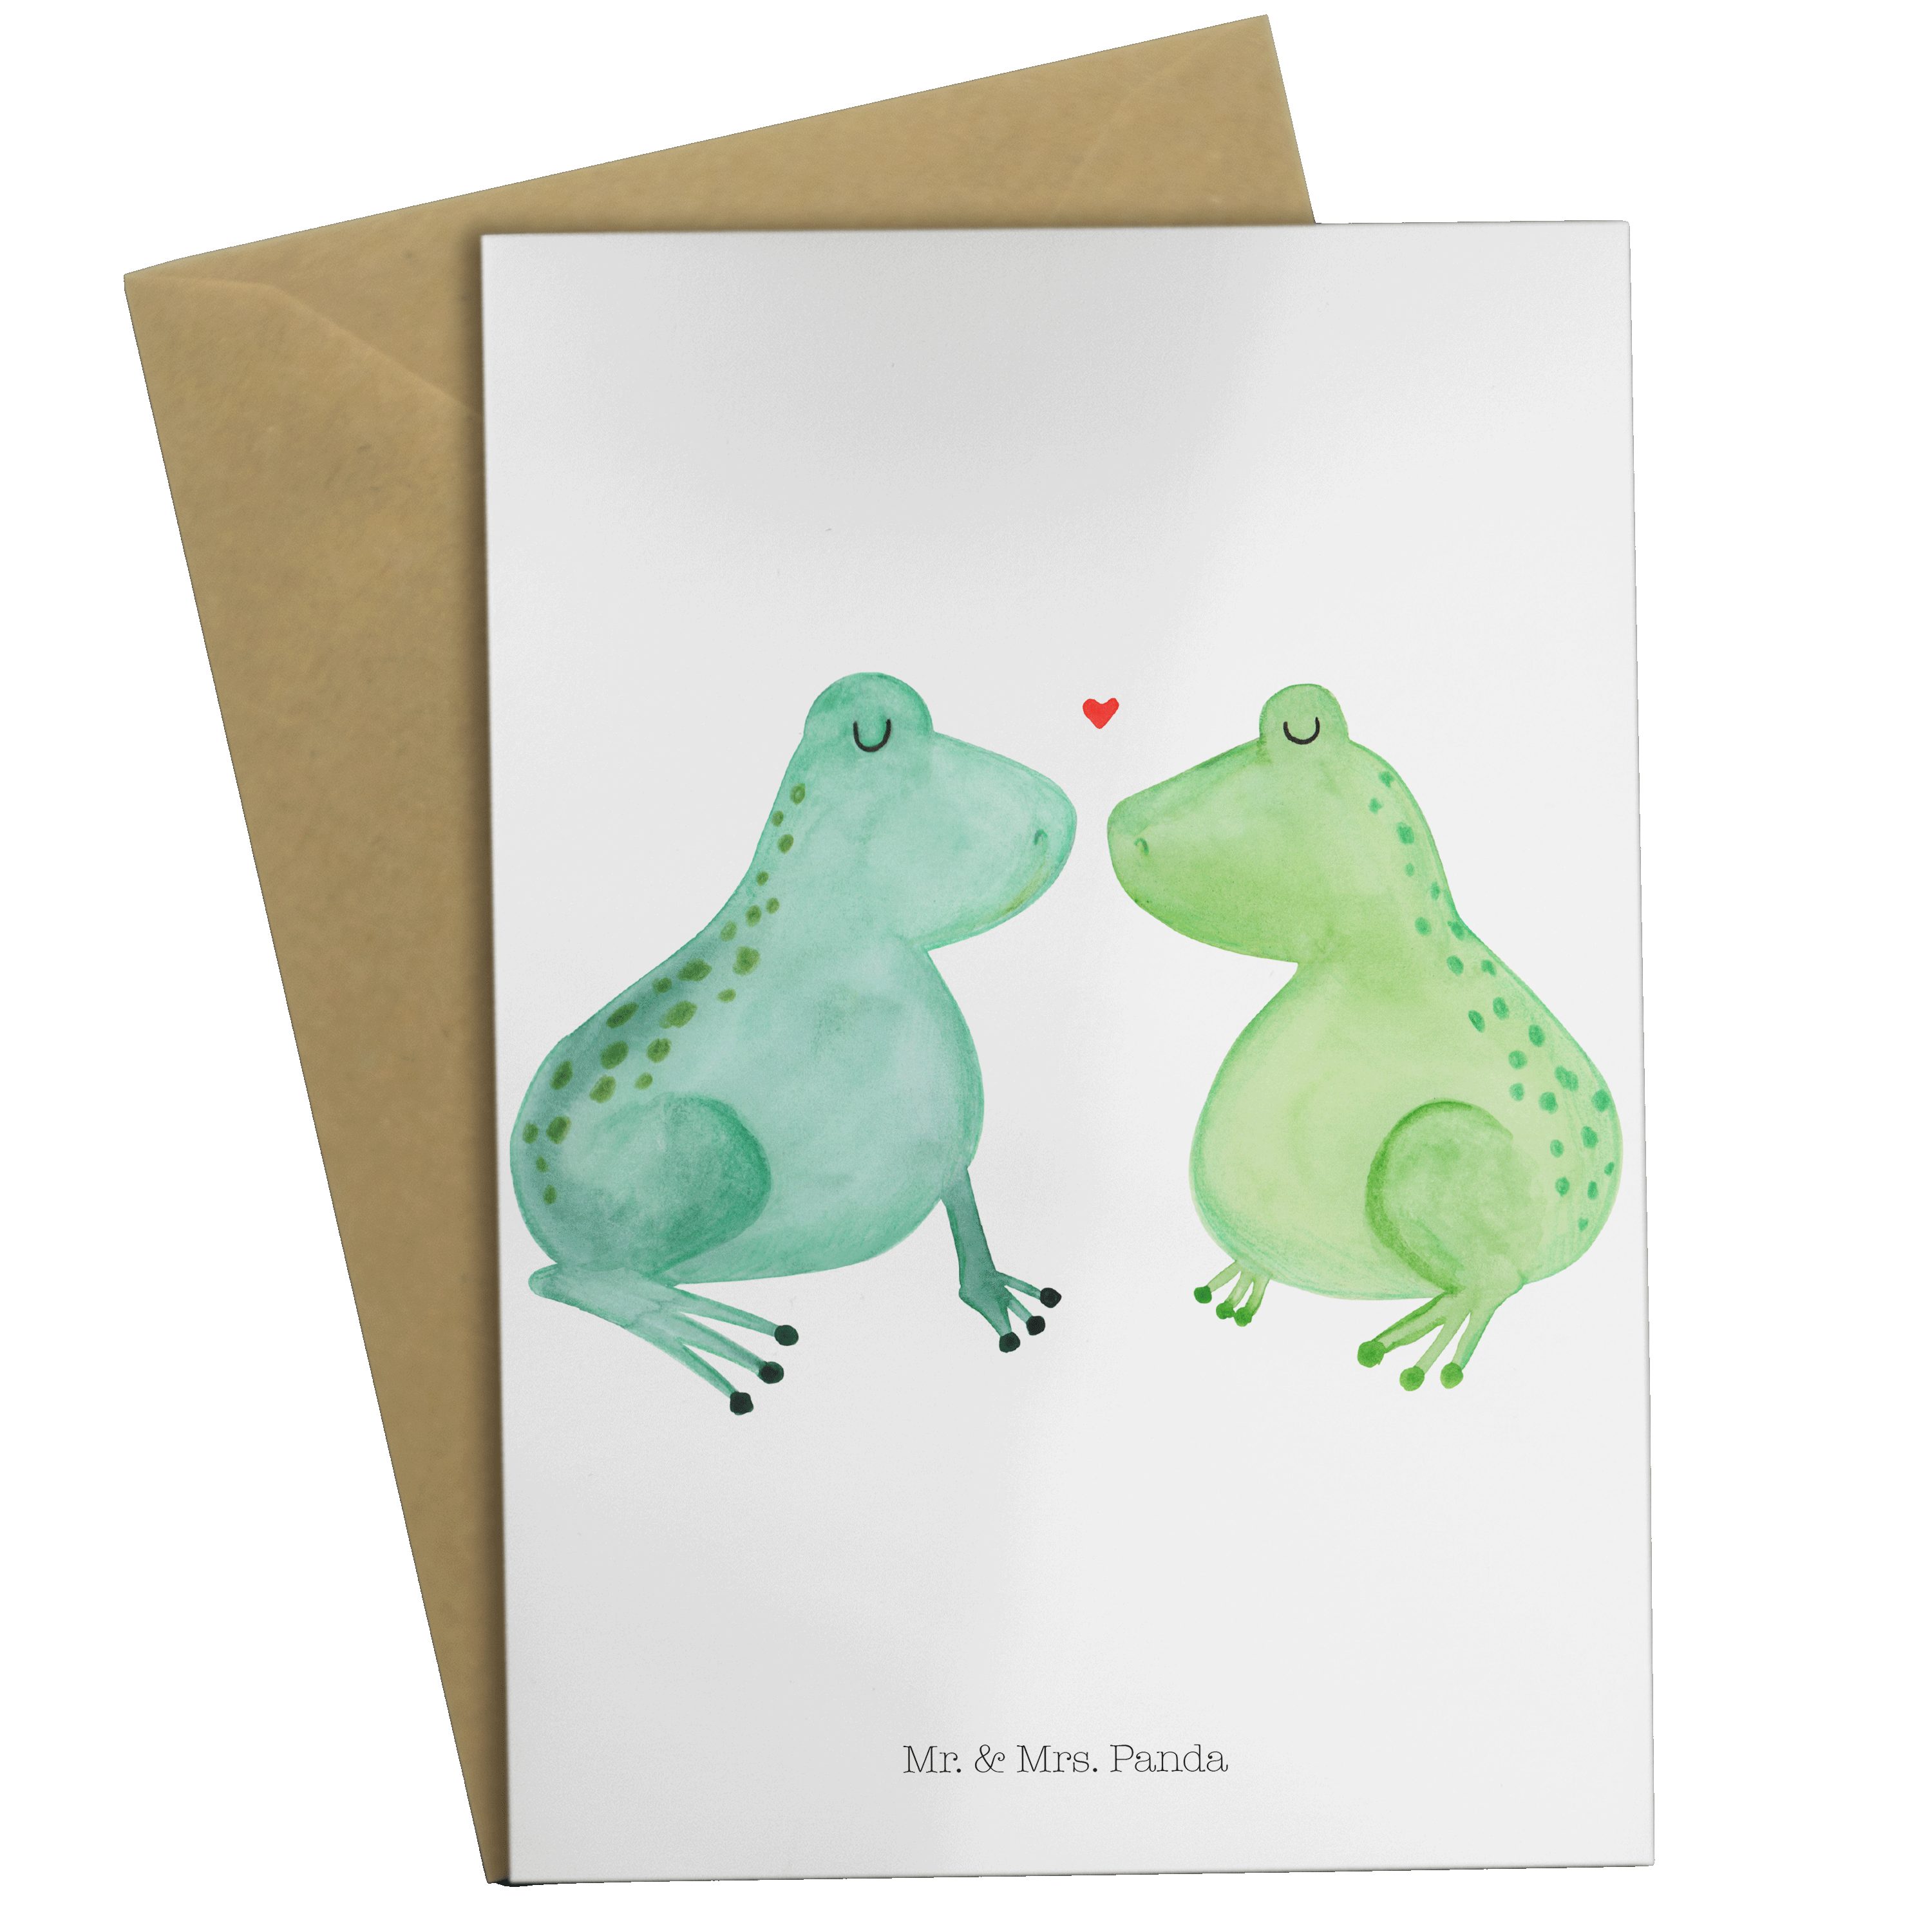 Mr. & Mrs. Panda Grußkarte Frosch Liebe - Weiß - Geschenk, Geburtstagskarte, Verlobt, Traumprinz